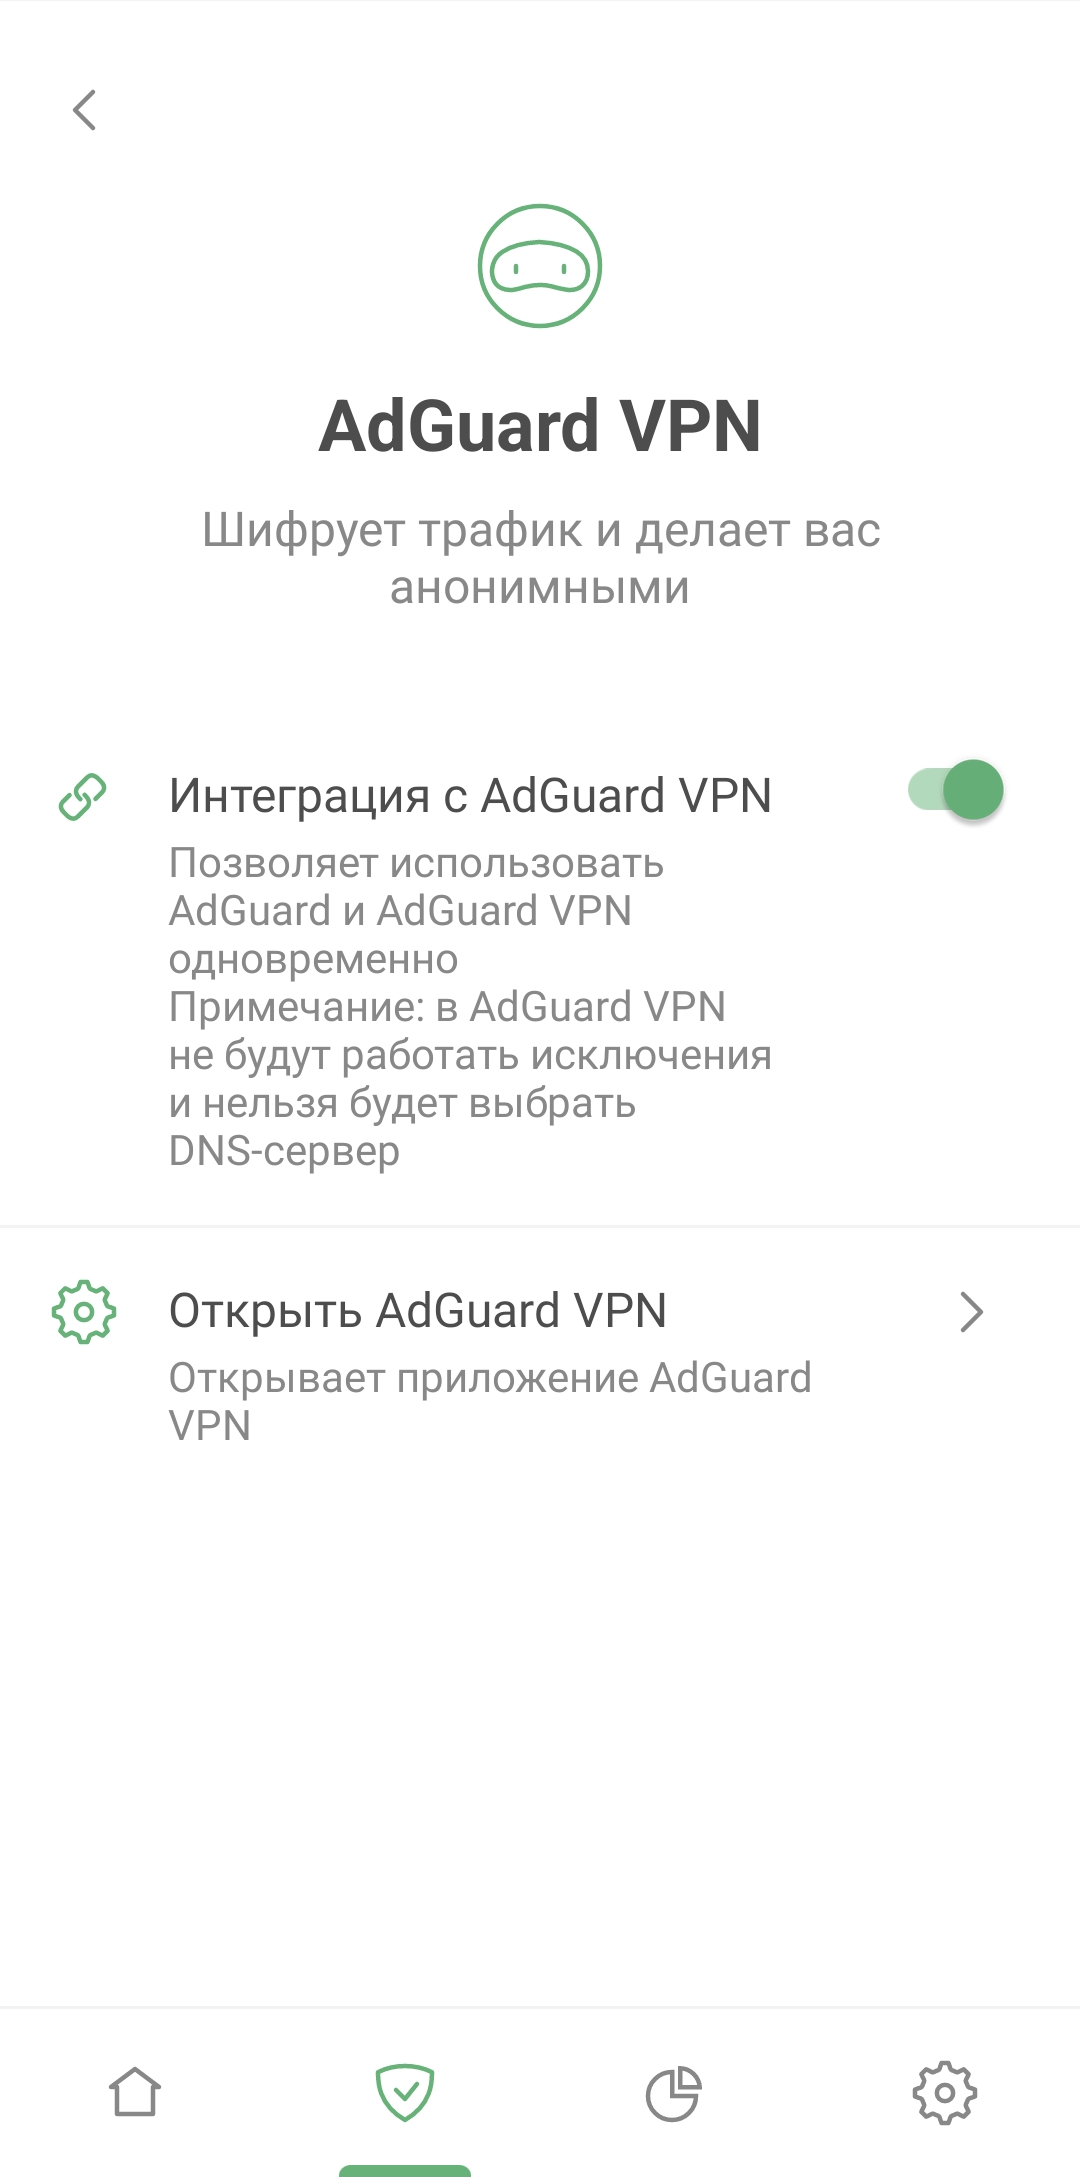 Интеграция с AdGuard VPN *mobile_border